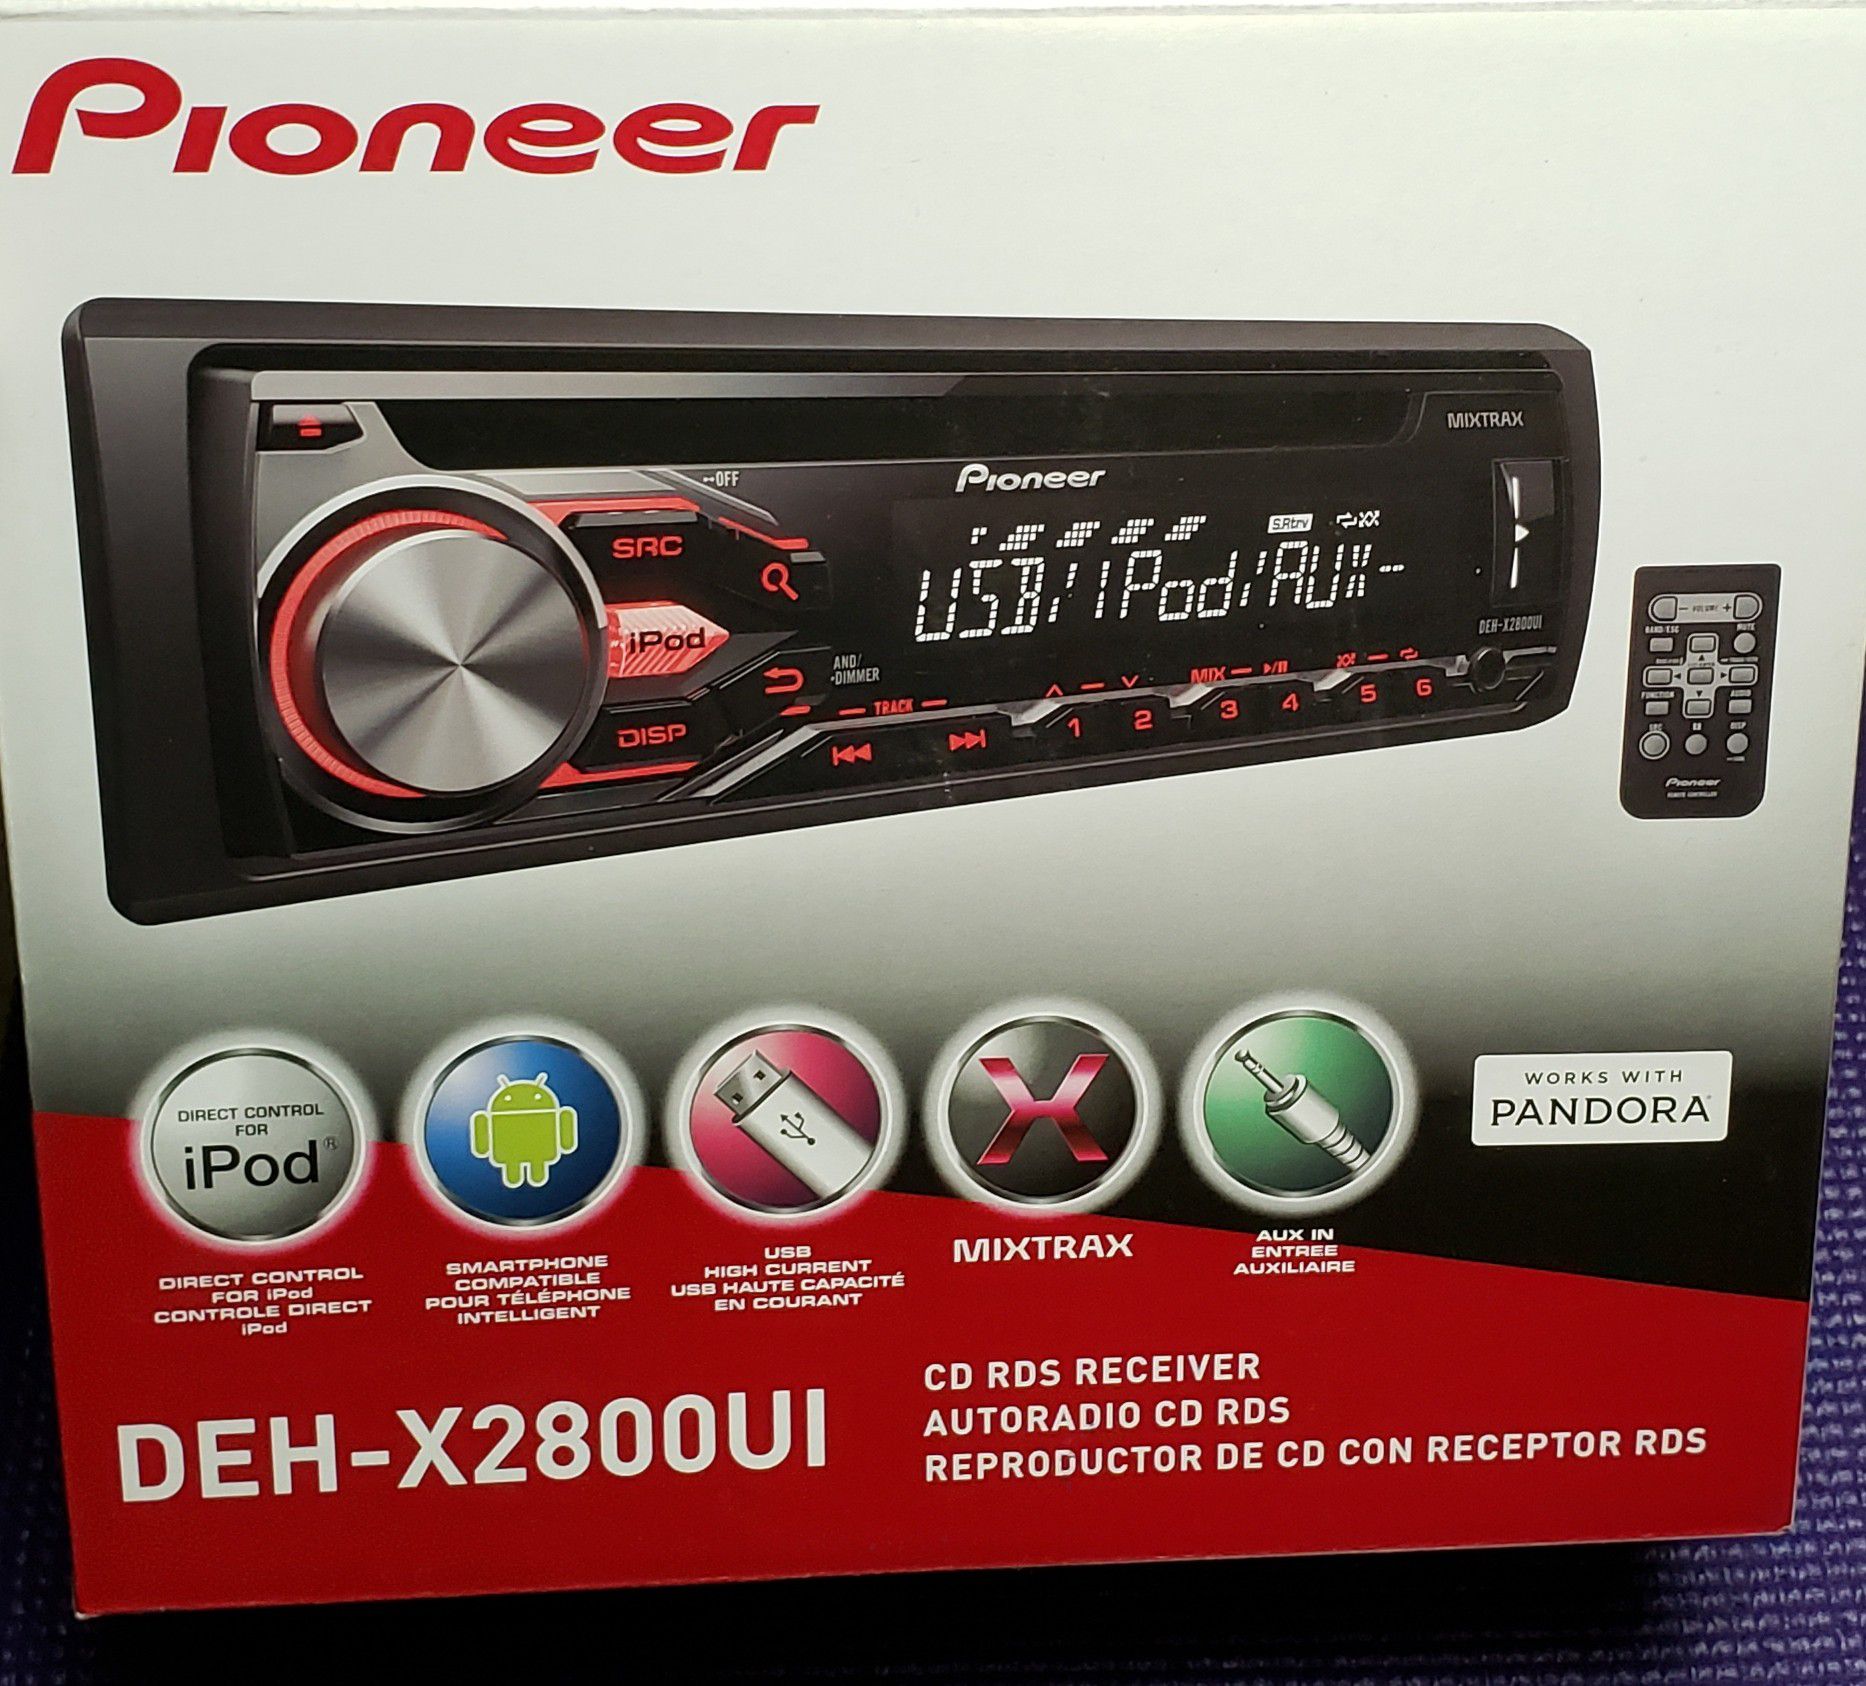 Pioneer DEH-X2800UI CD receiver